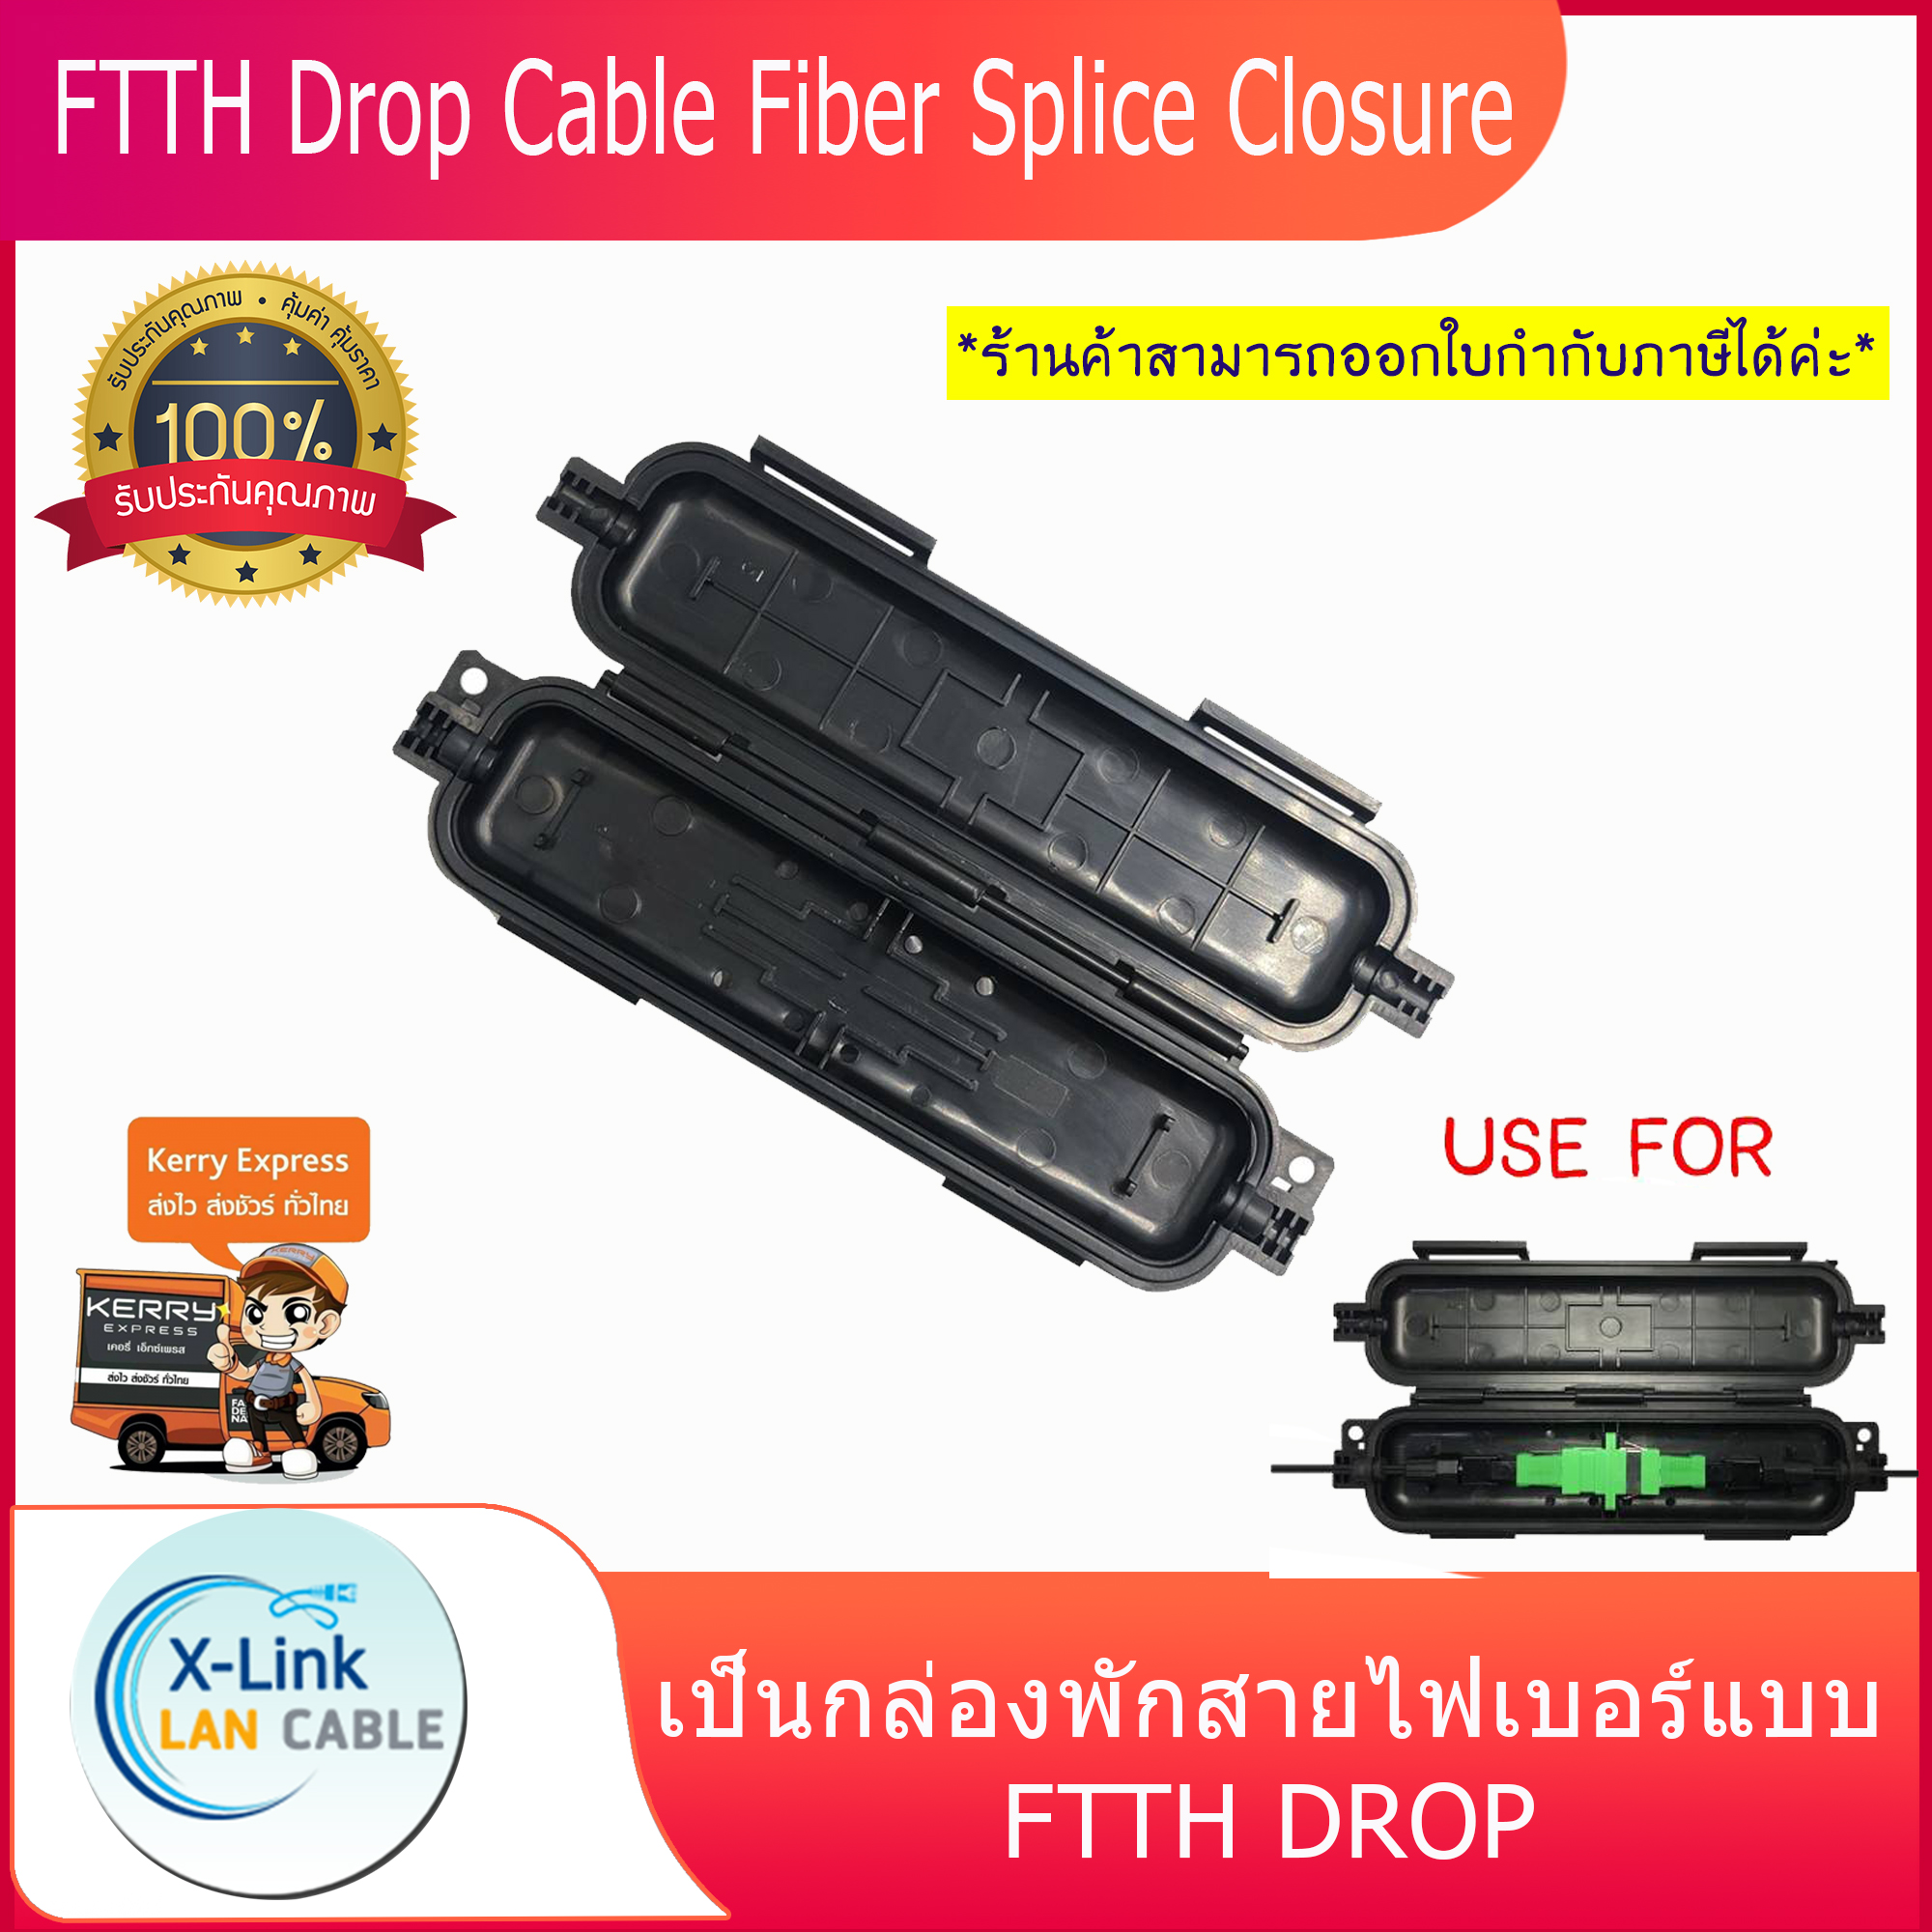 FTTH Drop Cable Fiber Splice Closure